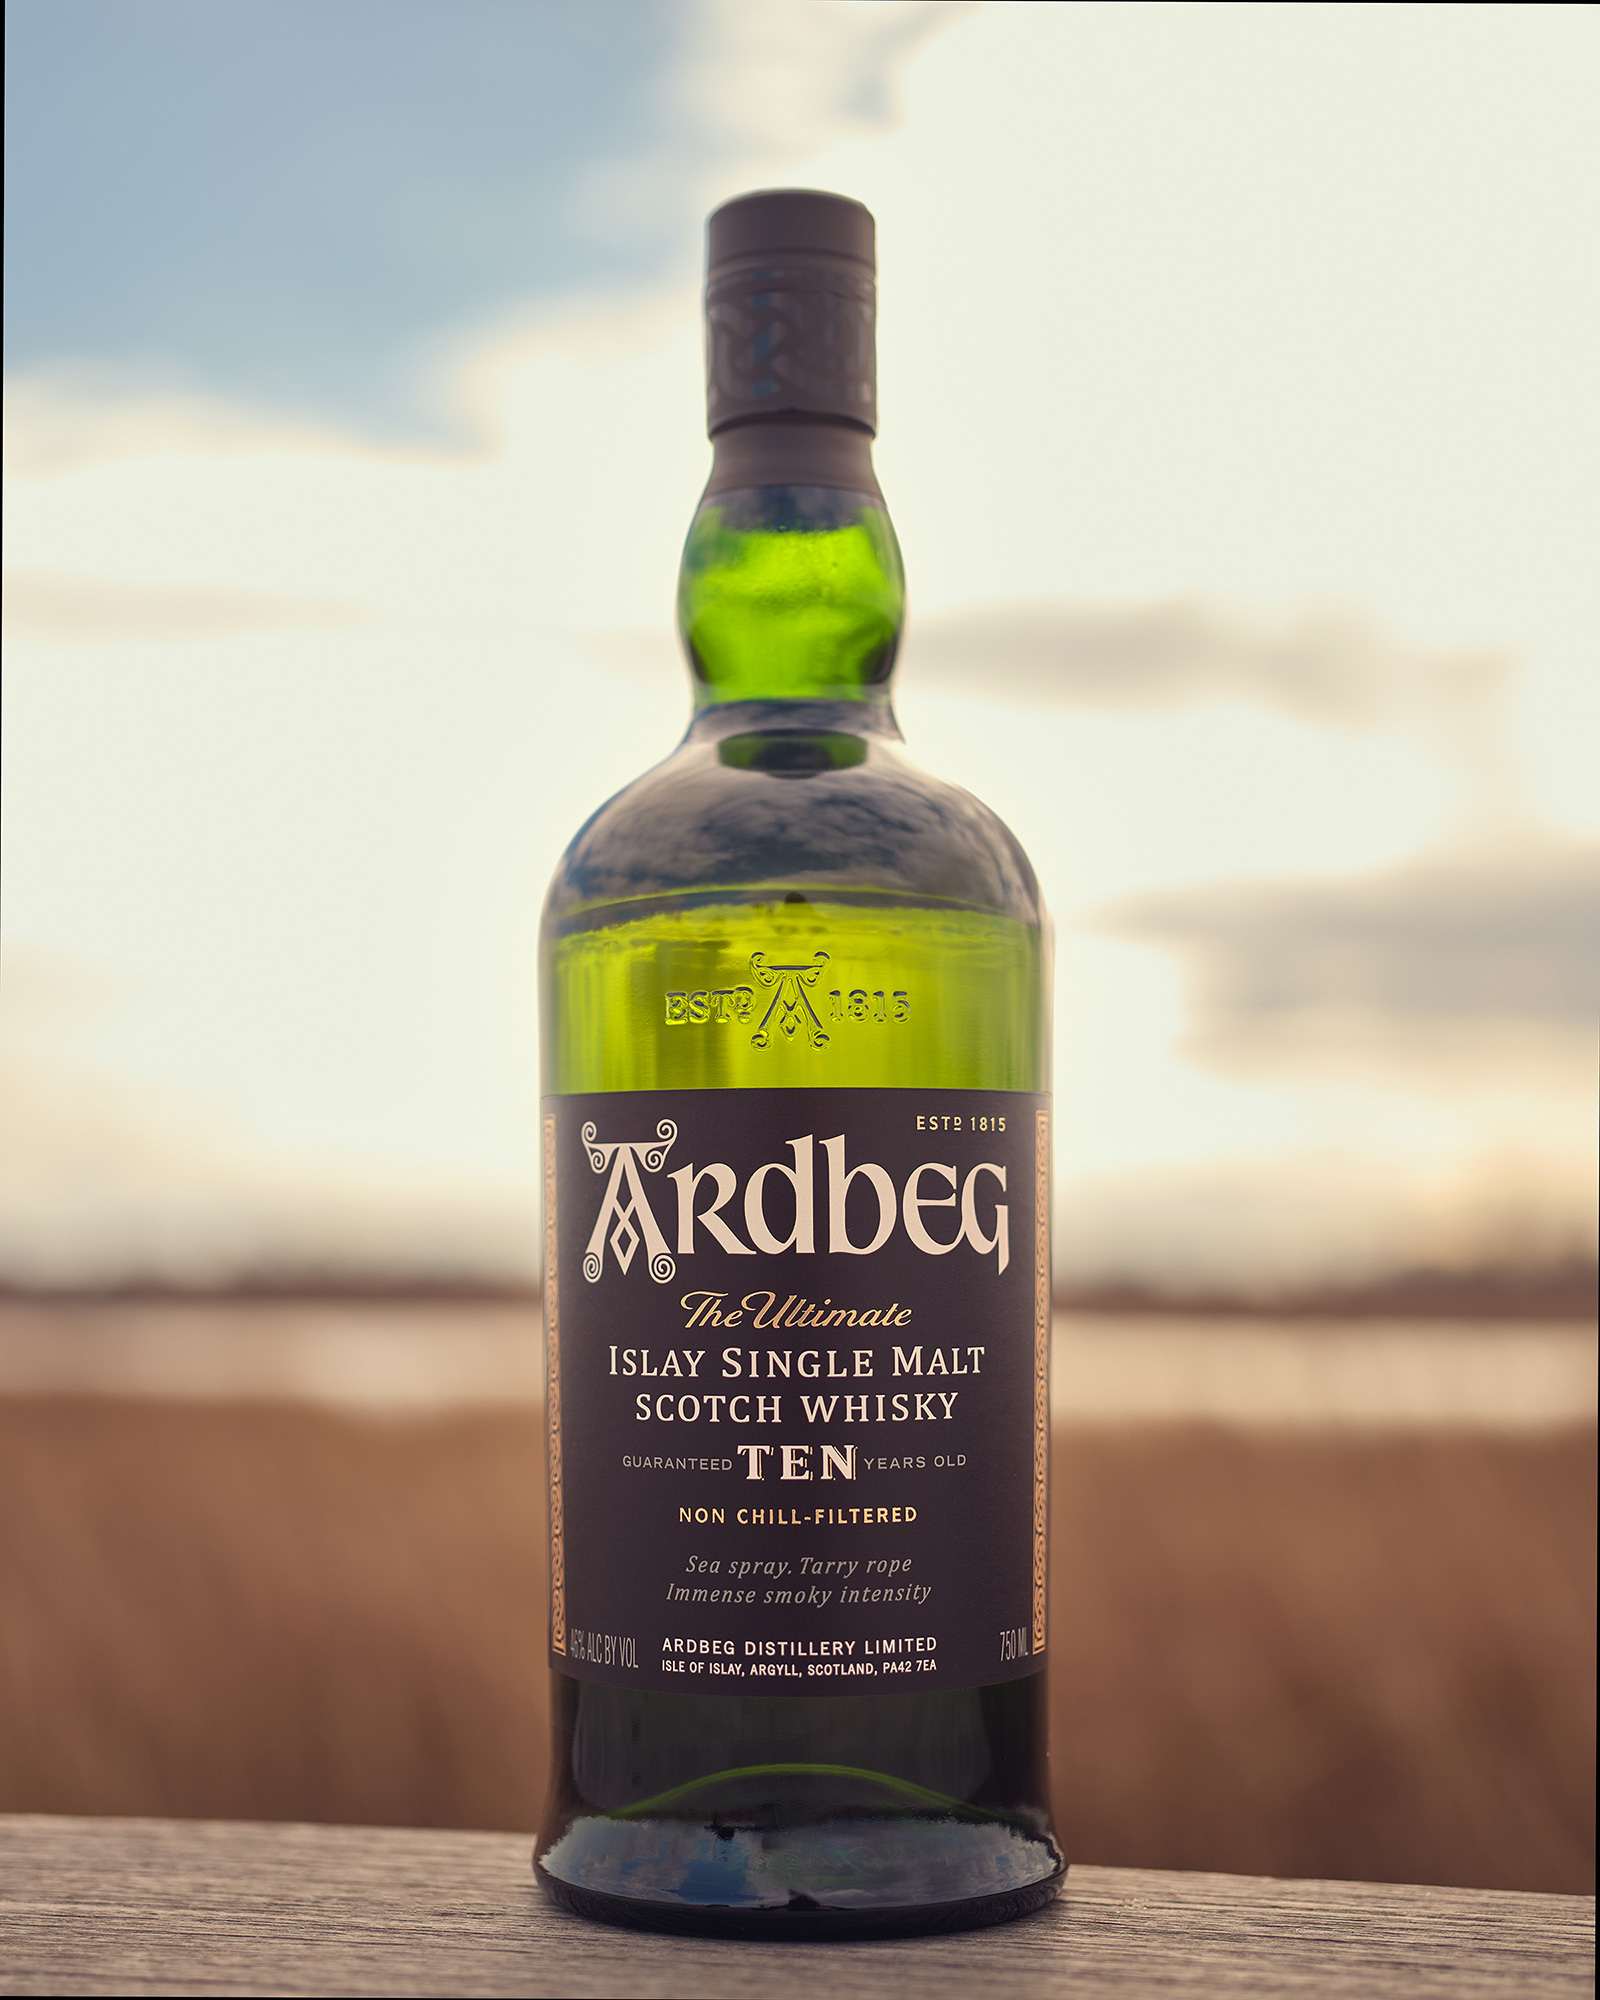 Ardbeg Ten Scotch Whisky, Craig LaCourt Commercial Photographer